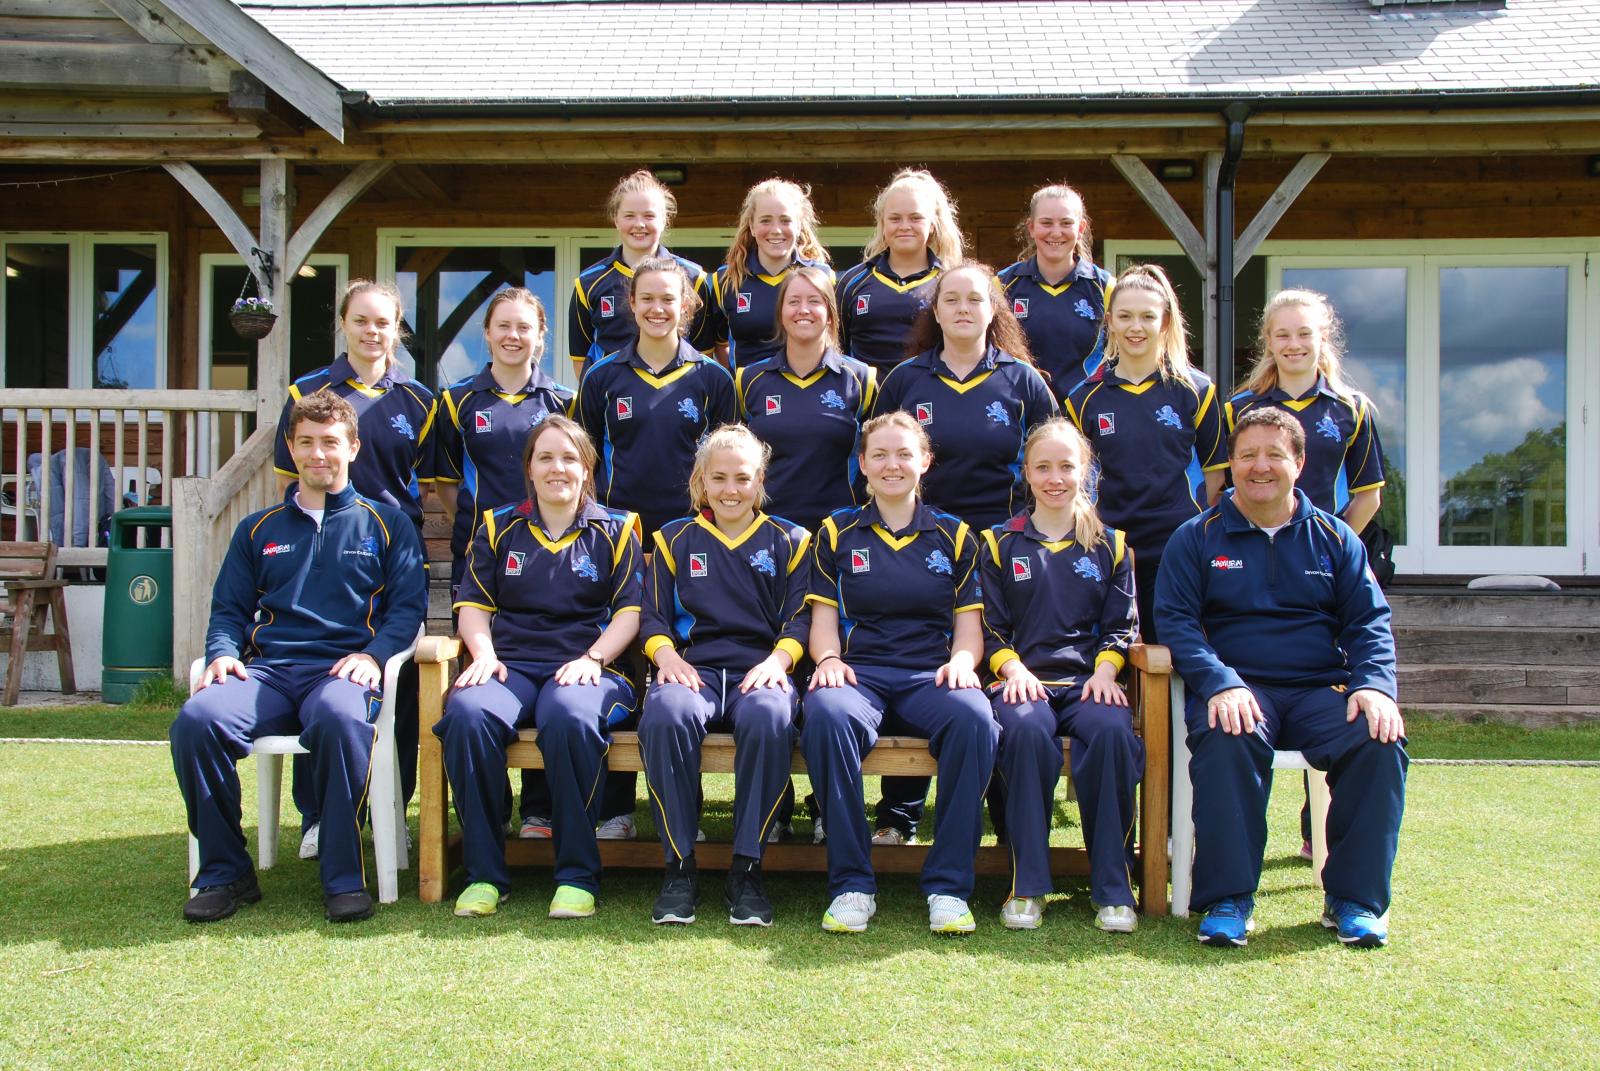 Warren Carr (bottom right) with the Devon Women's team in 2019. Credit: Chris Cottrell.